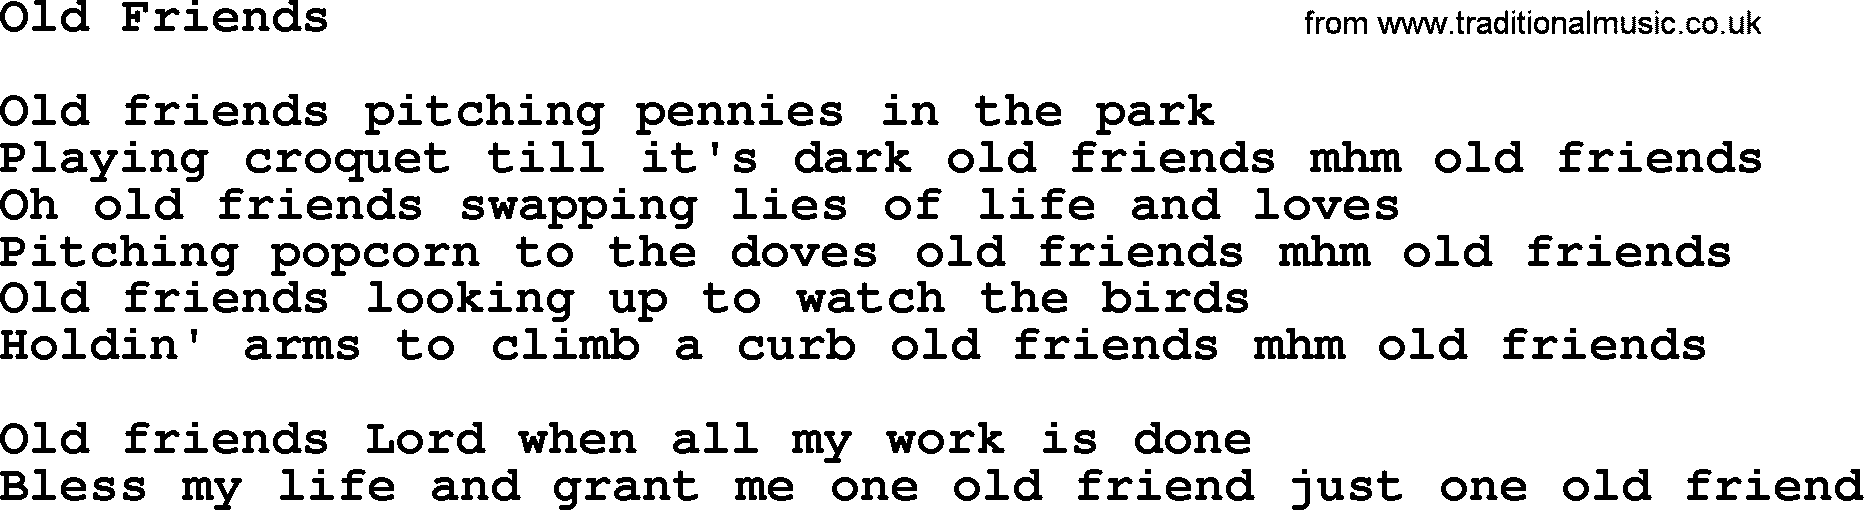 Willie Nelson song: Old Friends lyrics